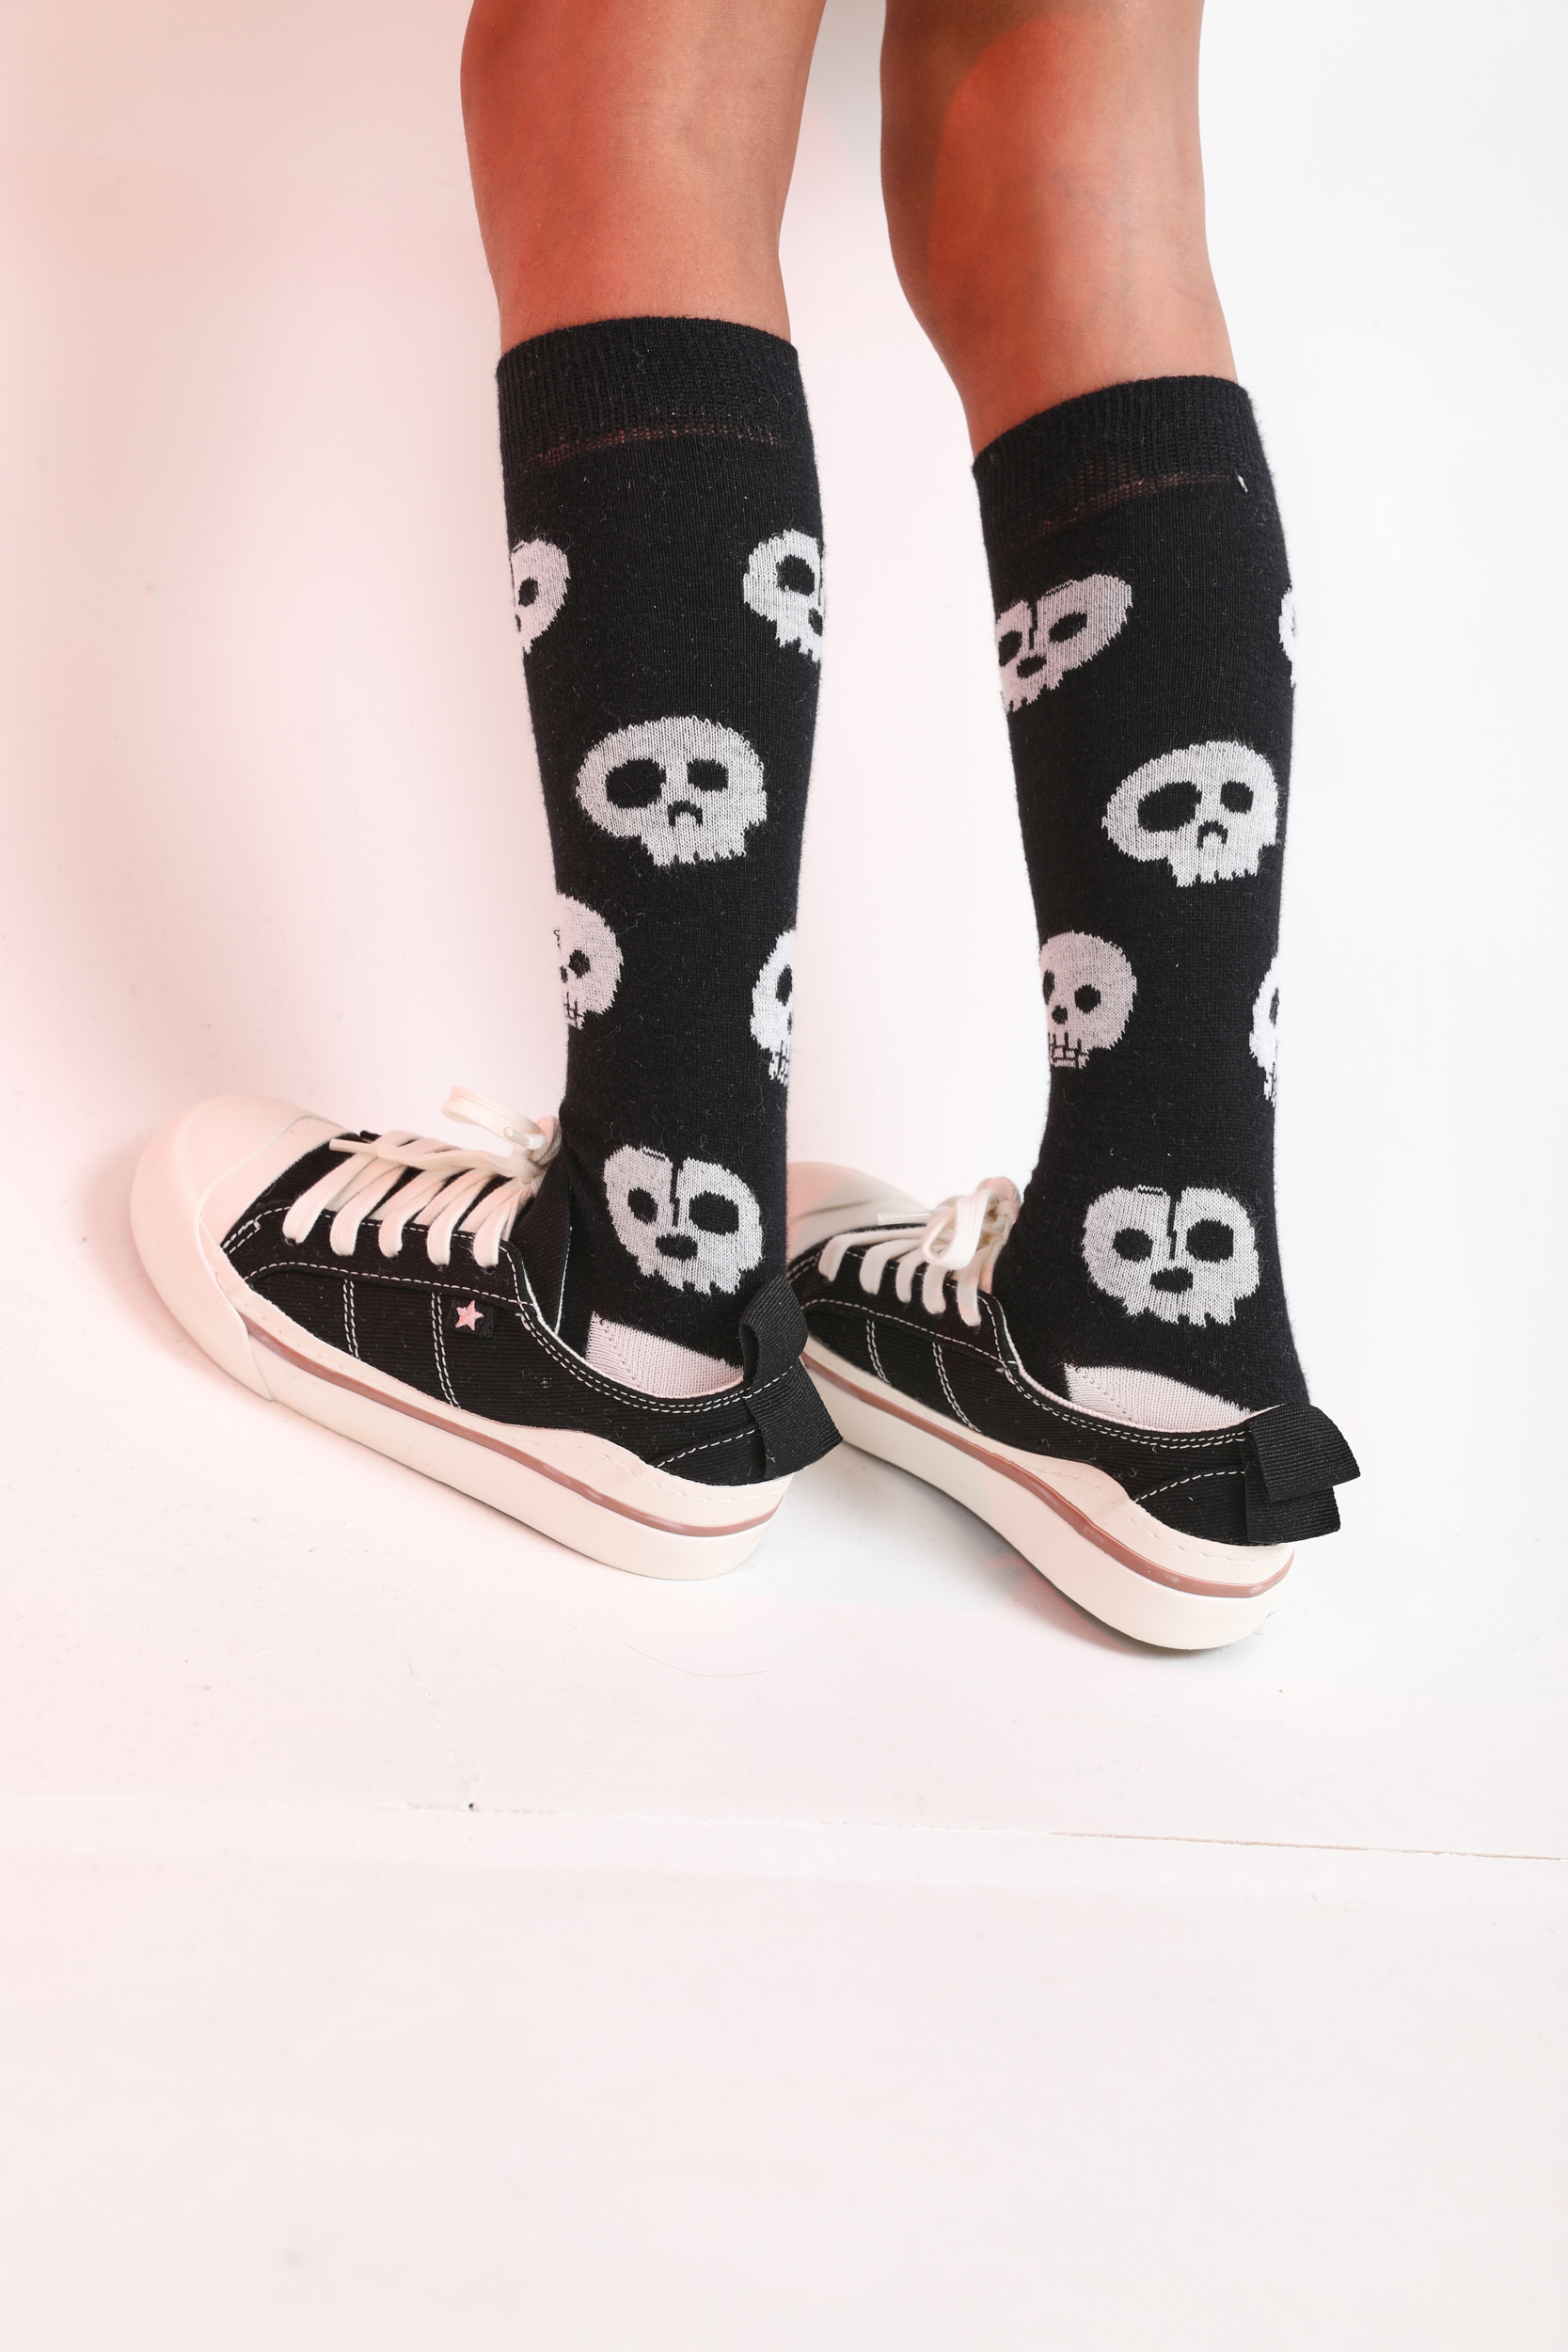 AOKDOOR New fashion 3D skull printing socks Skeleton man Socks breathable summer cotton soft short socks 